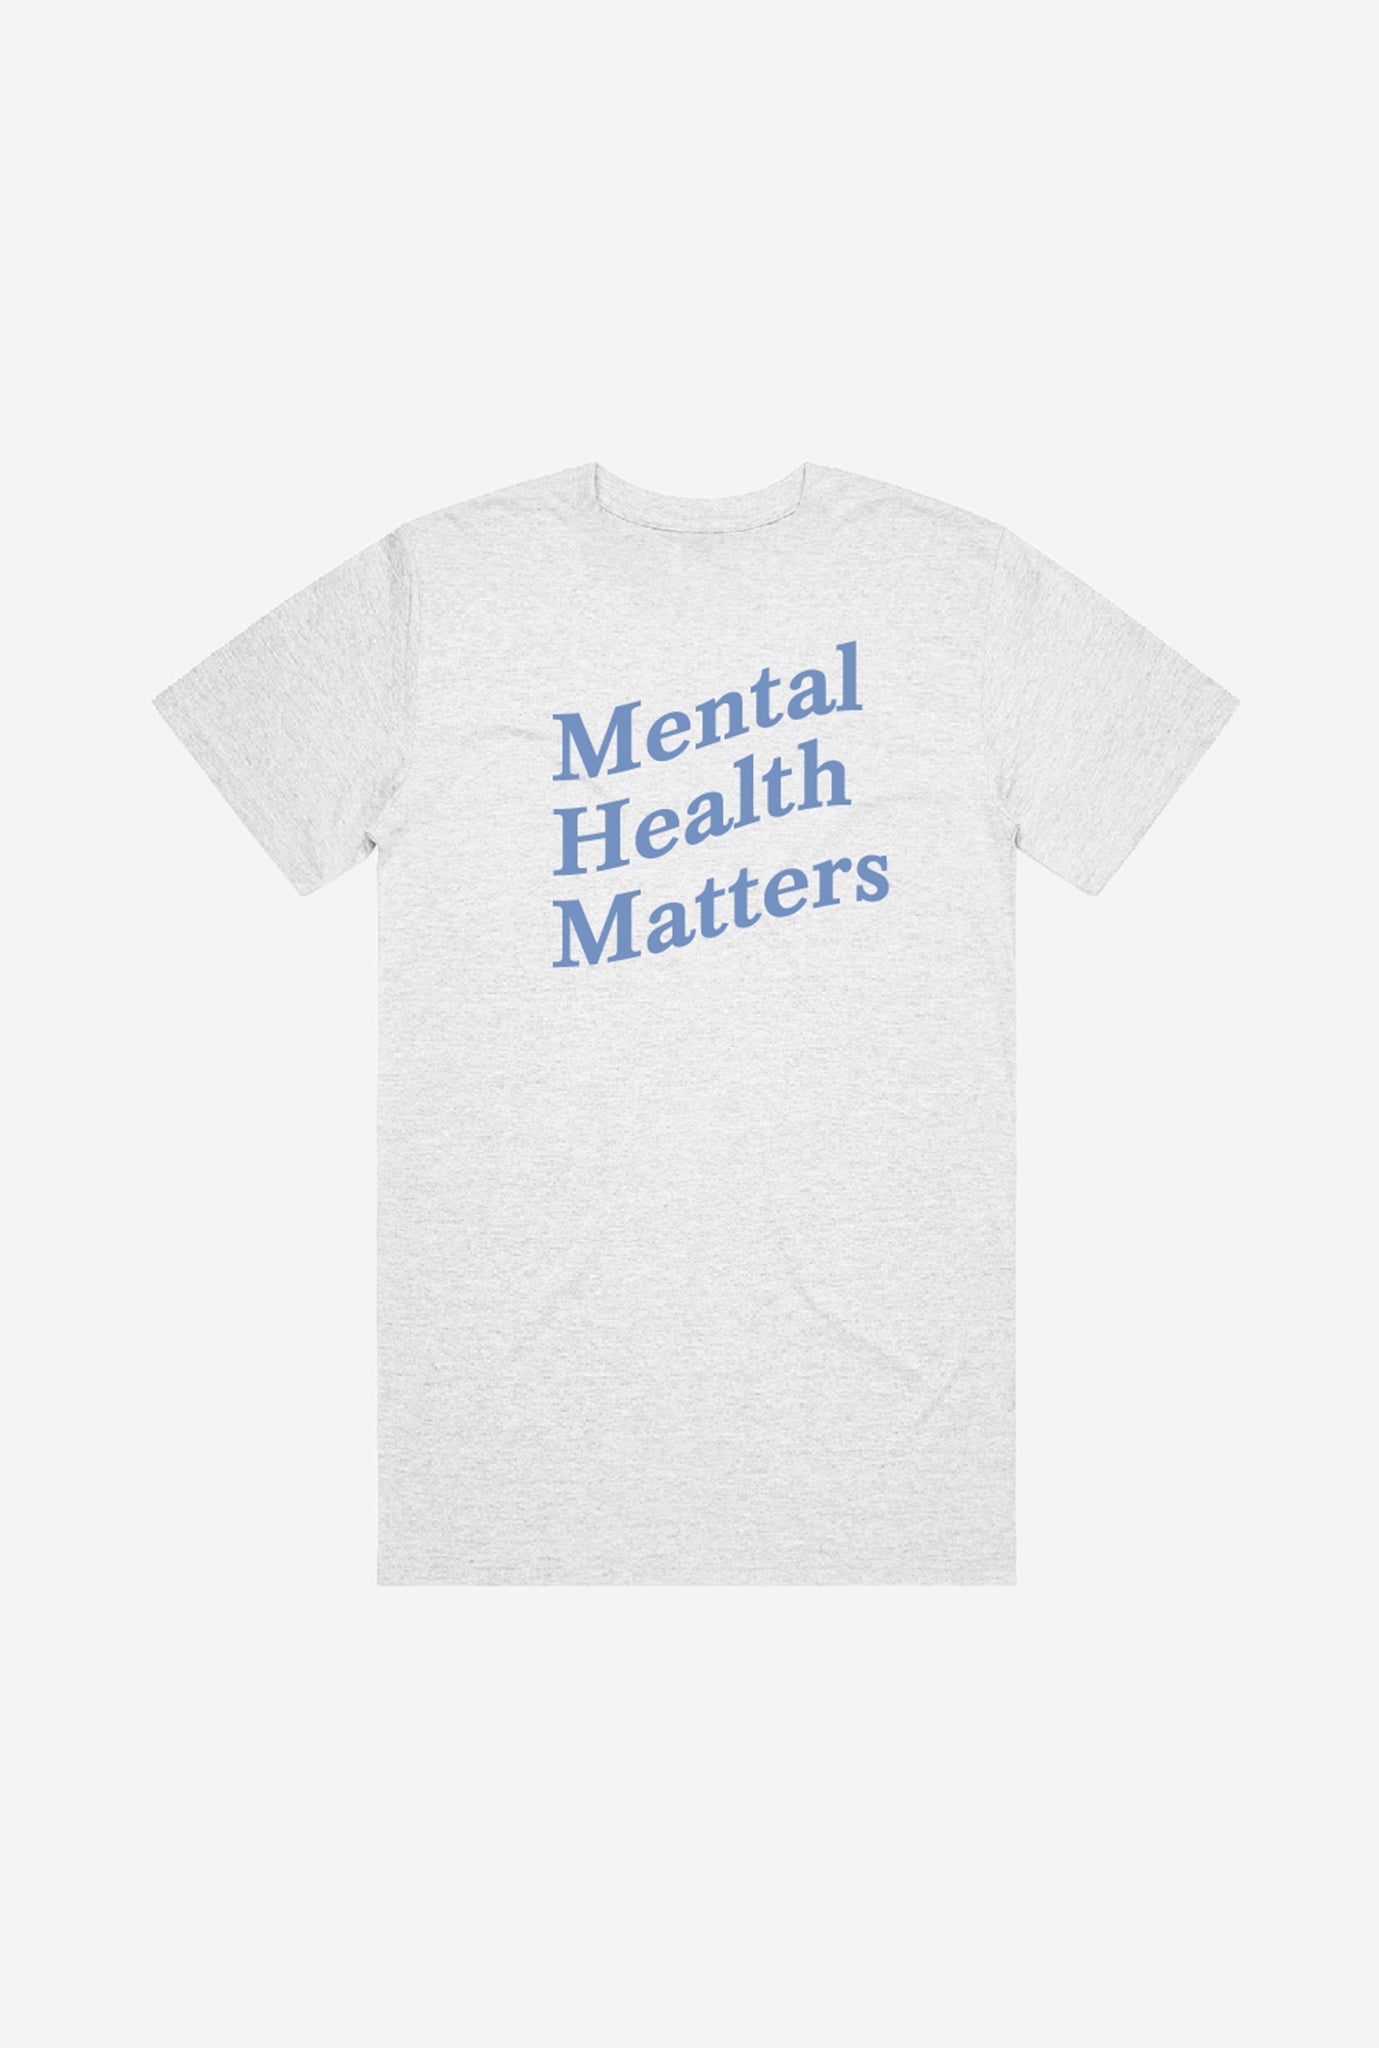 Mental Health Matters T-Shirt - Ash